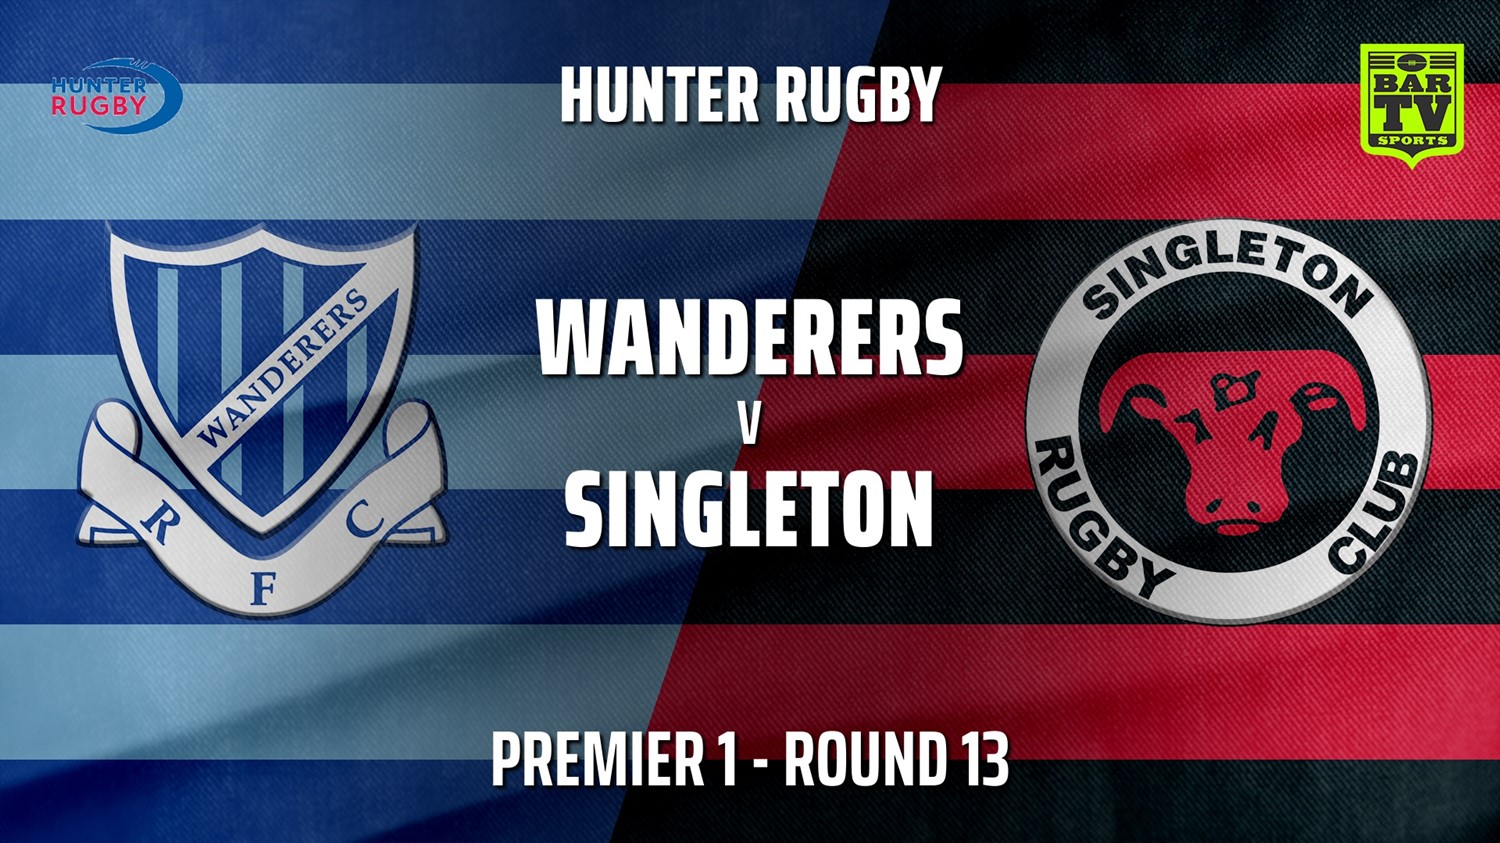 210717-Hunter Rugby Round 13 - Premier 1 - Wanderers v Singleton Bulls Minigame Slate Image